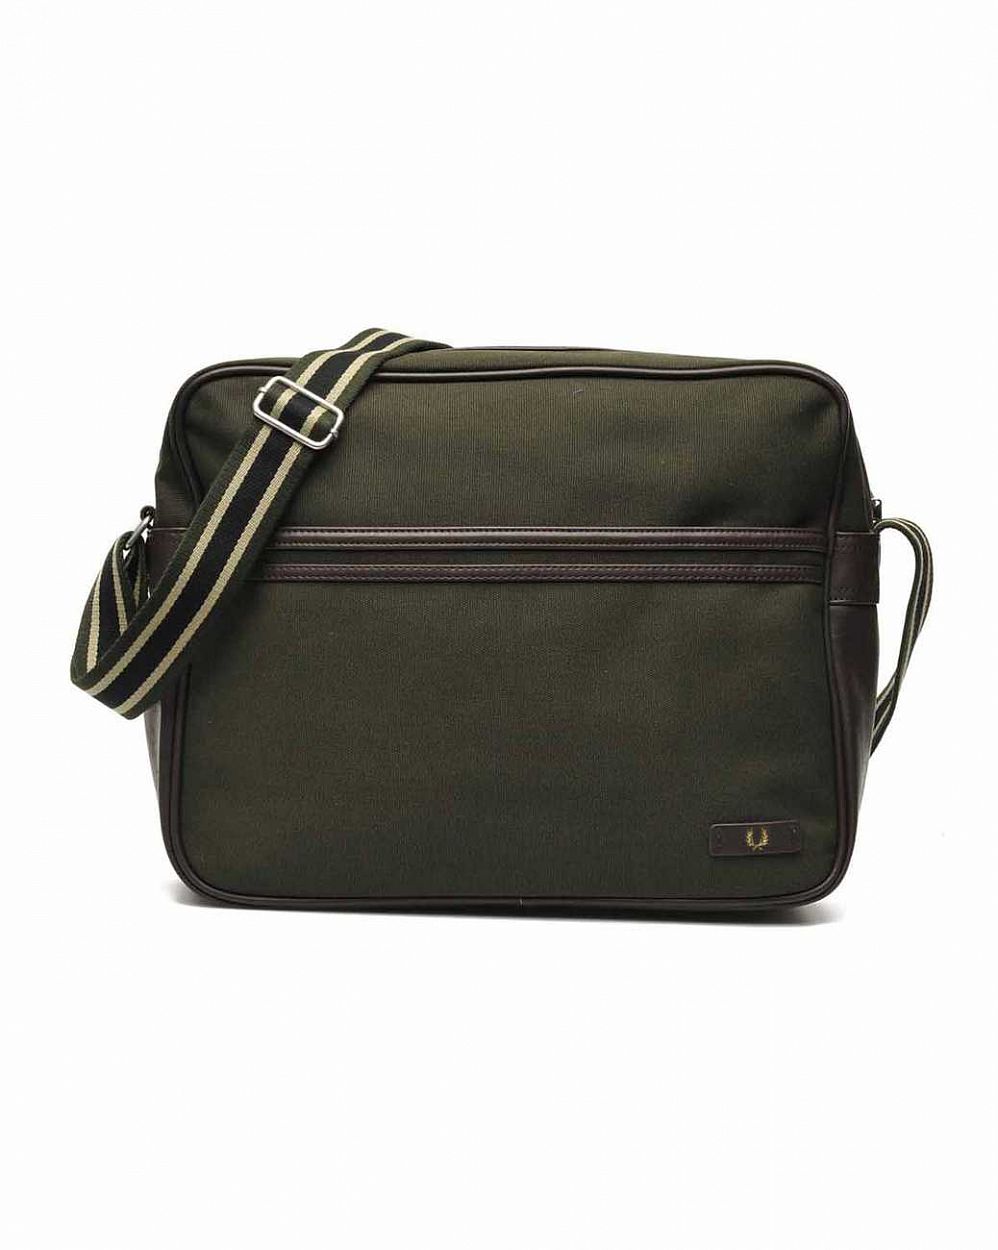 Сумка Fred Perry L5209 Classic Canvas Shoulder Bag Hunting Green отзывы